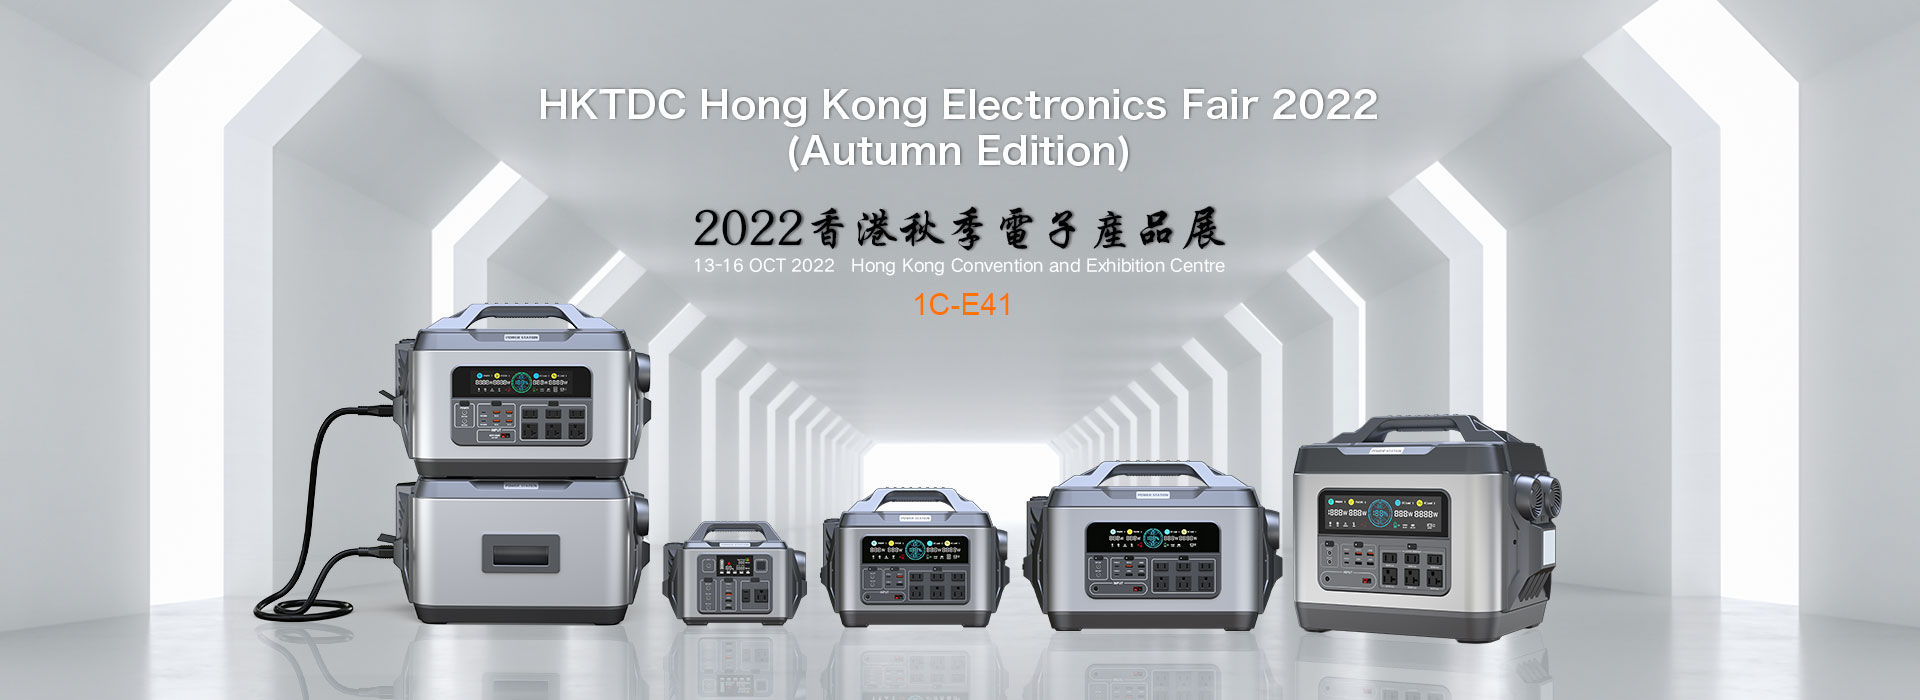 HKTDC Hong Kong Electronics Fair 2022